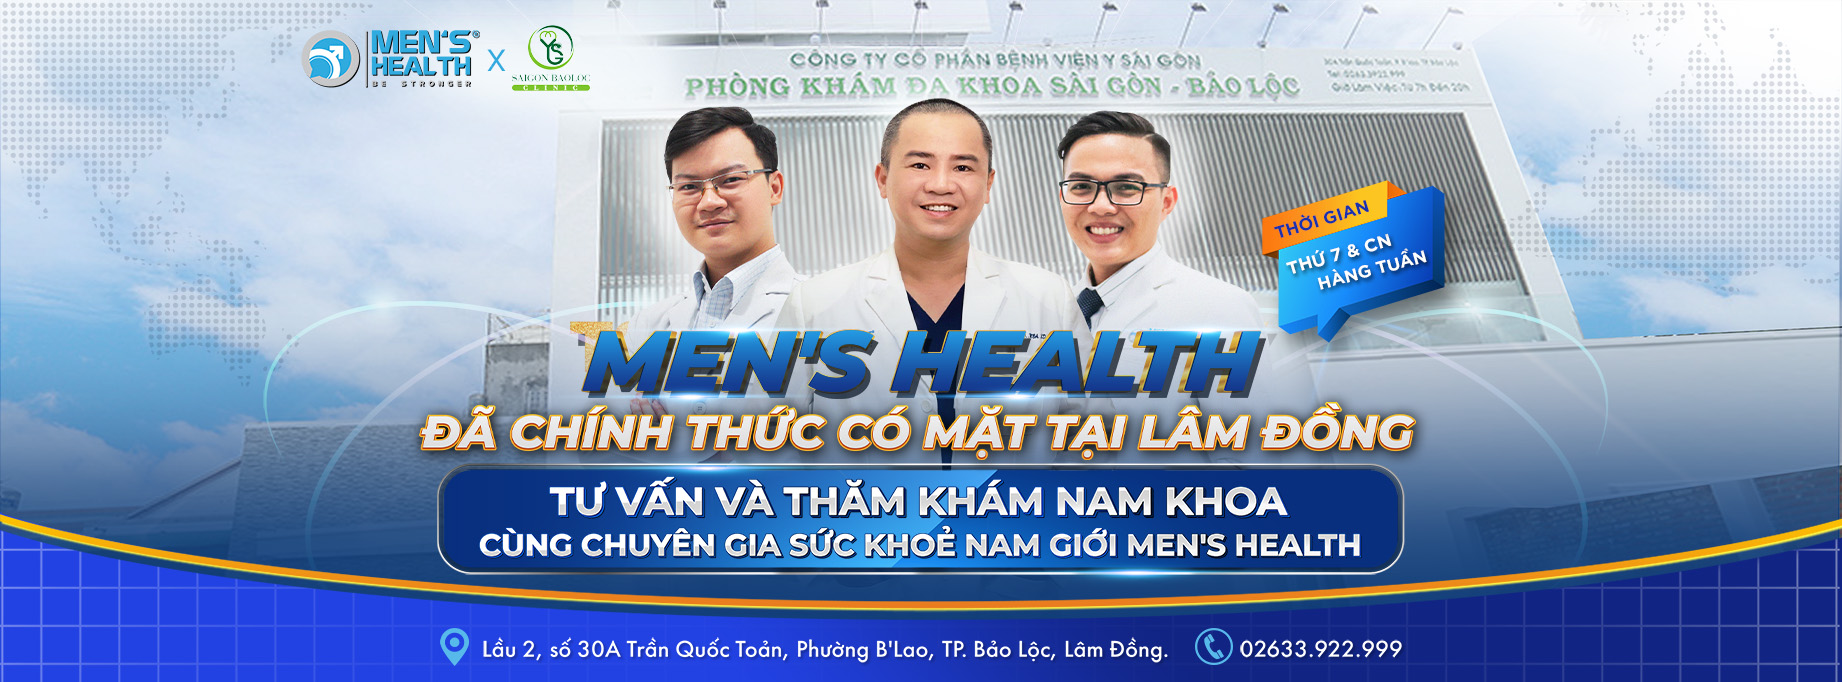 Men-health-hop-tac-phong-kham-sai-gon-bao-loc